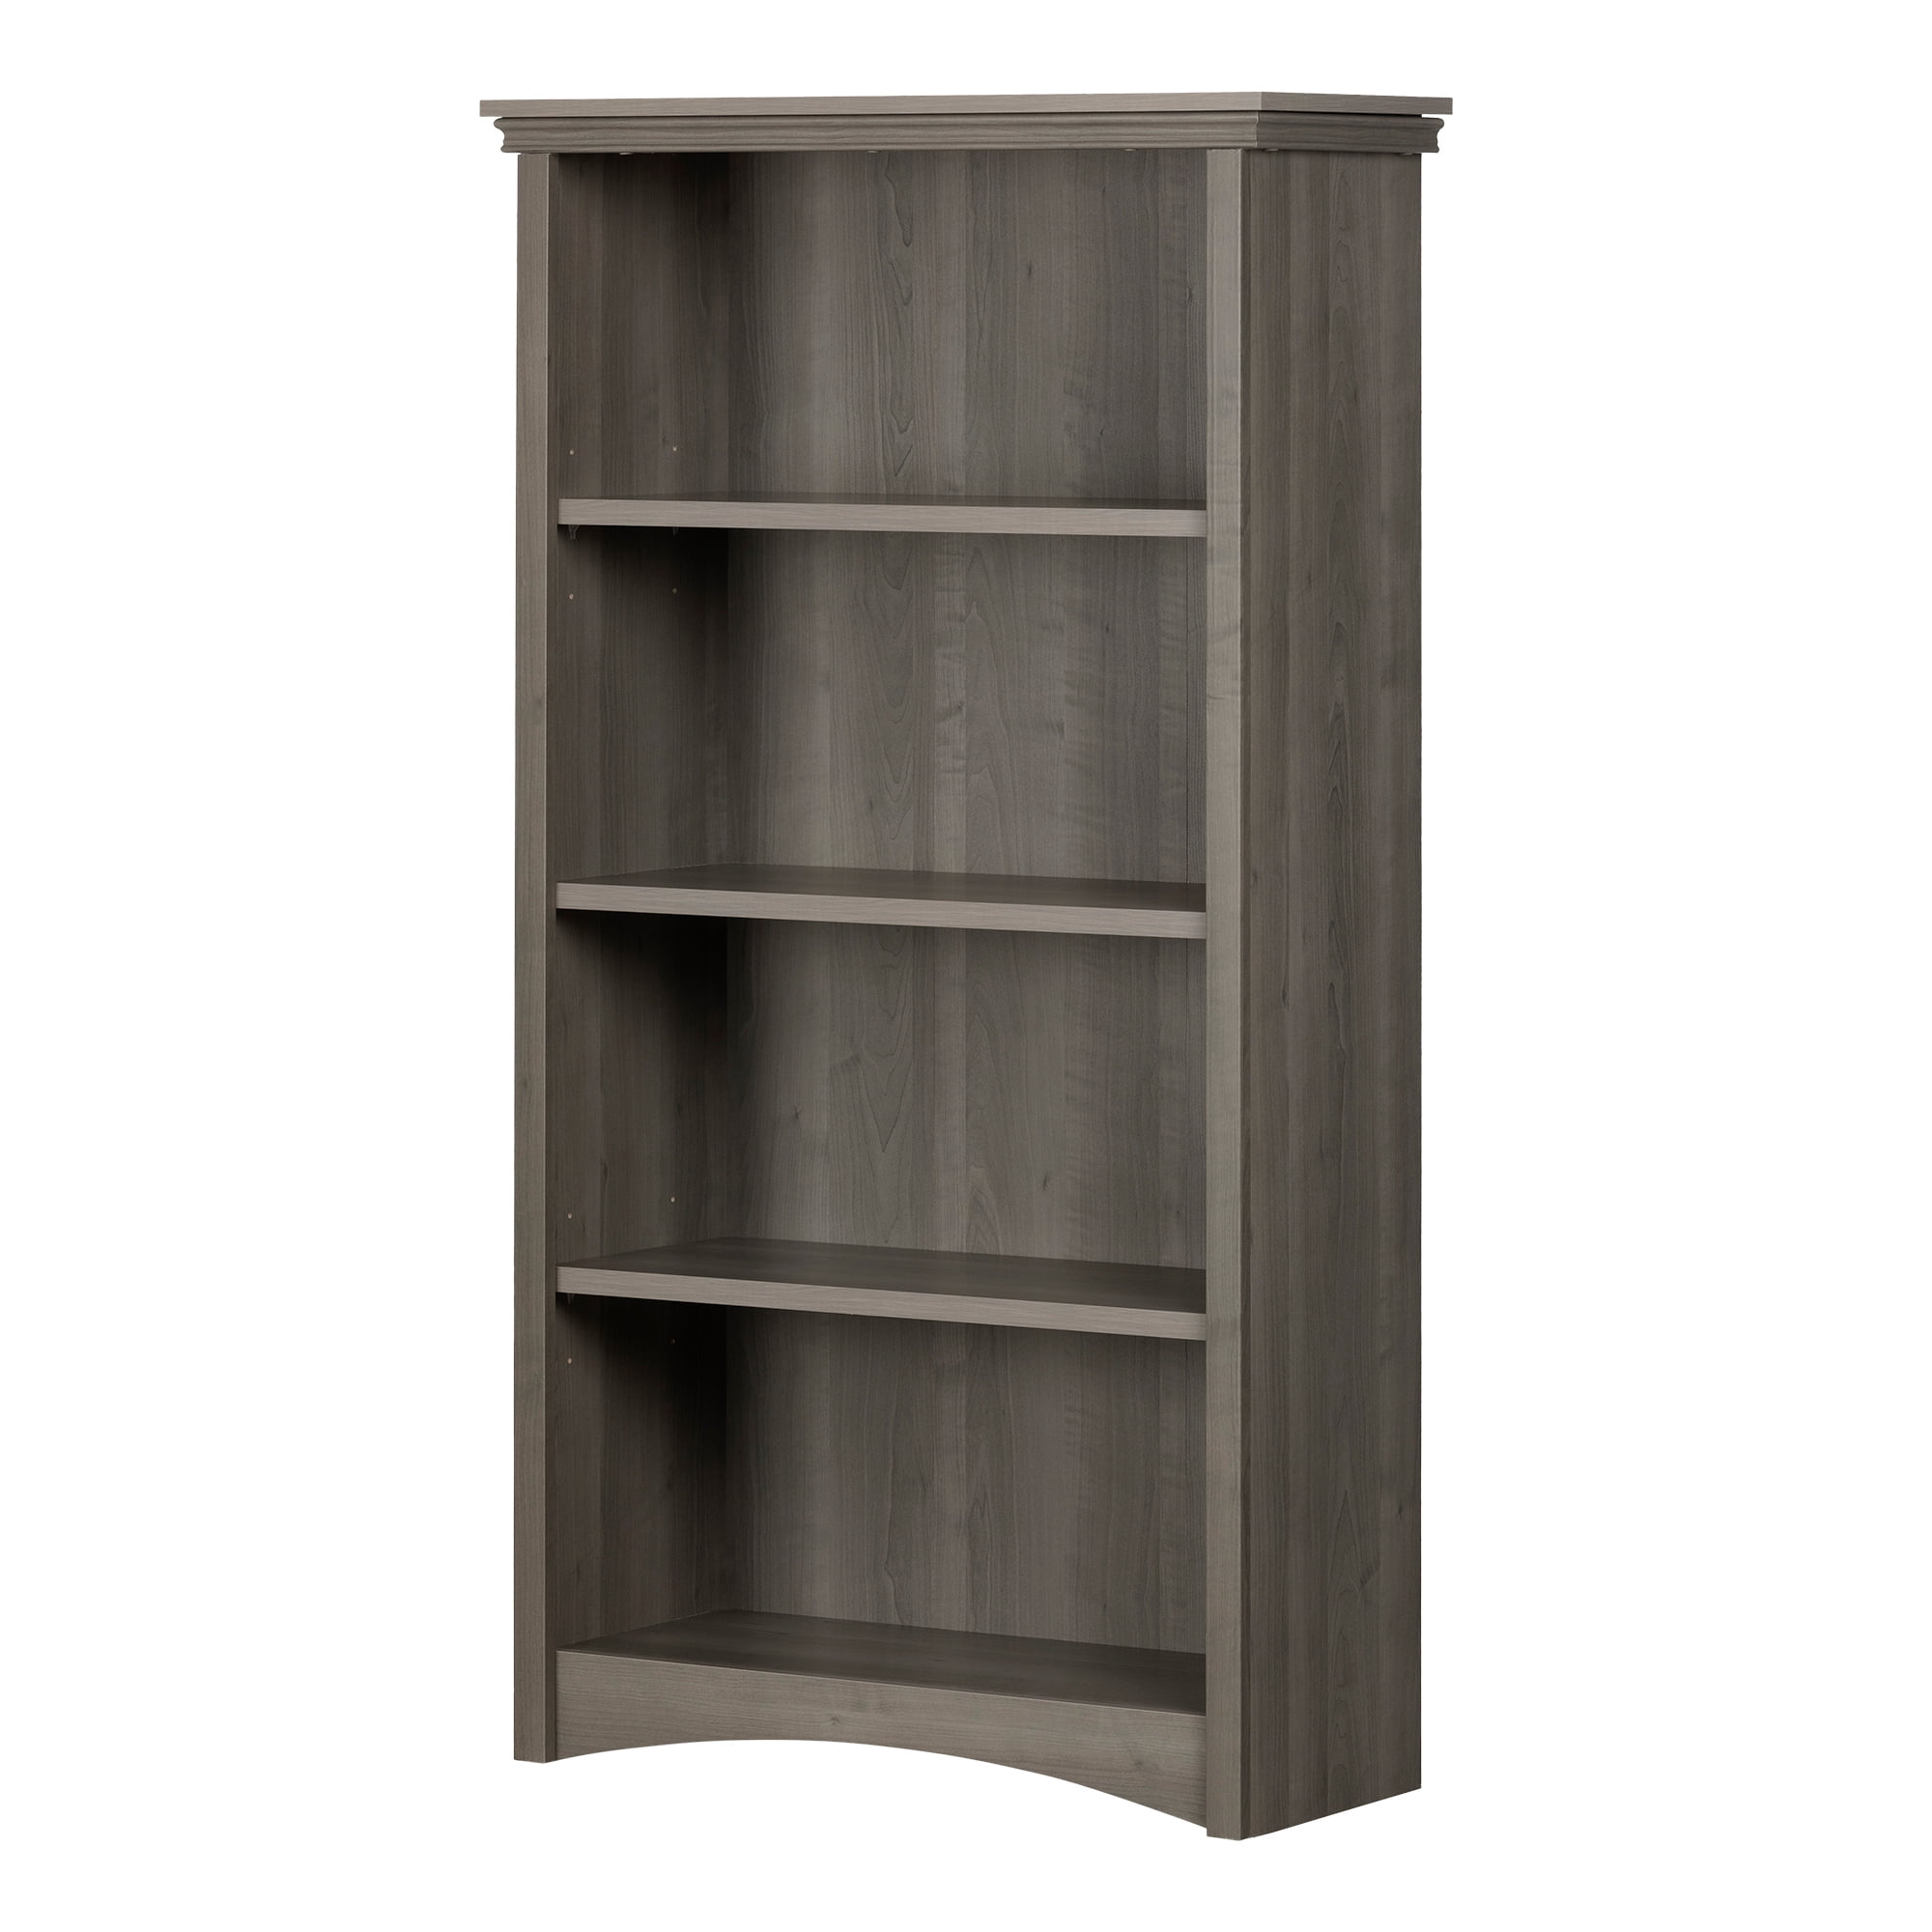 Details about   Beech 4 Shelf Wooden Bookcase Bookshelf Home Office Storage Furniture Shelvin 